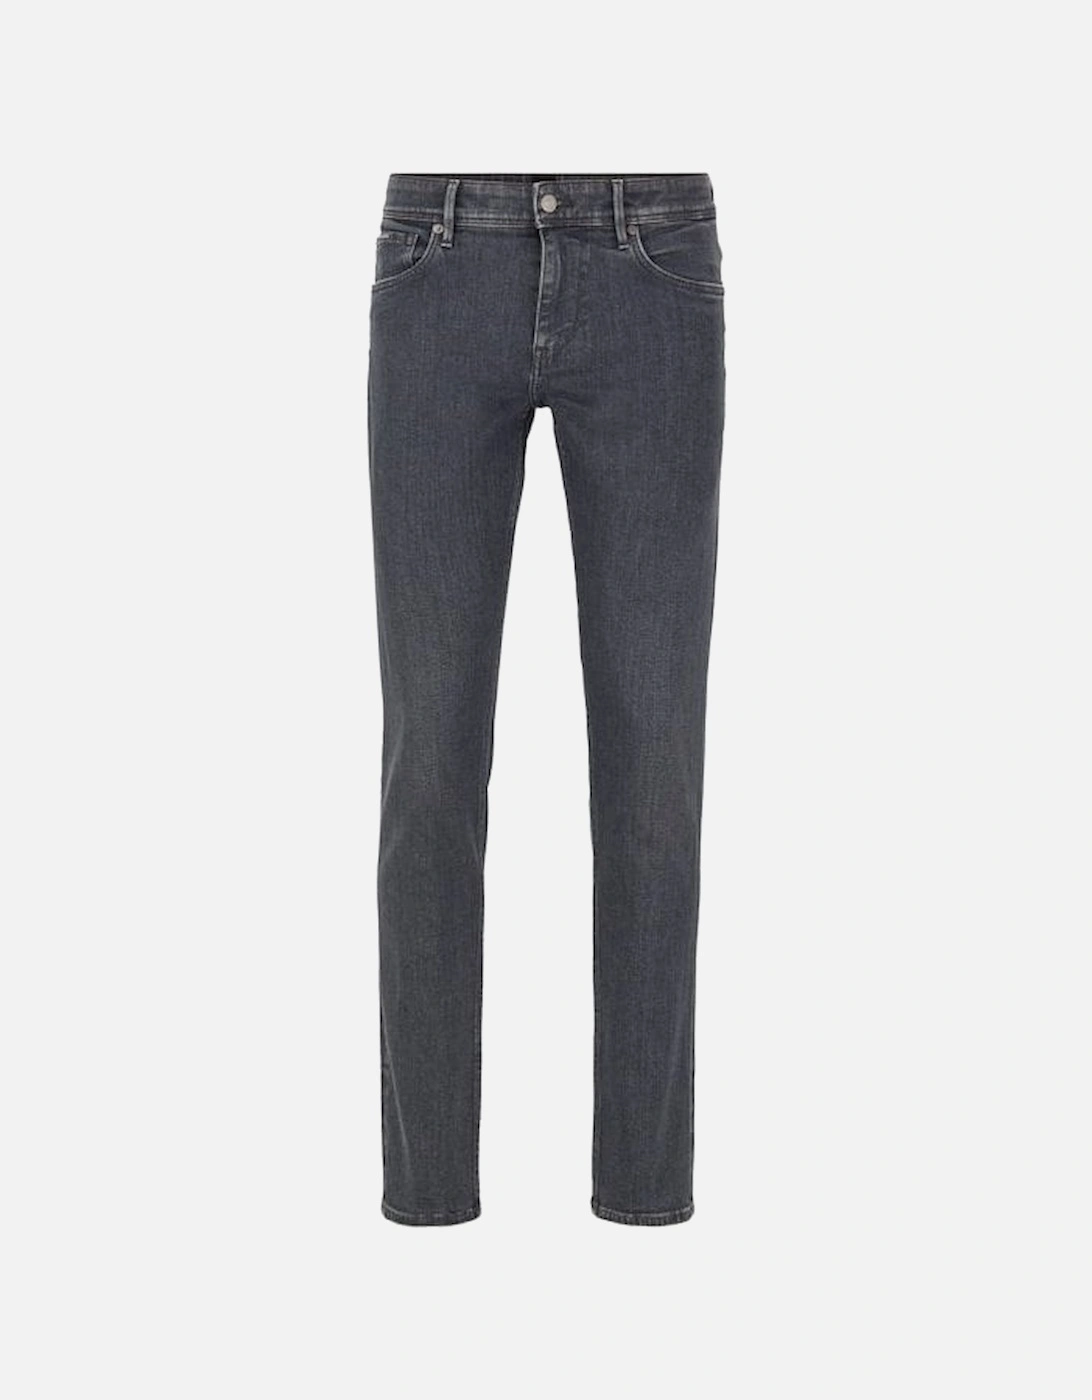 Charlestone4 Extra Slim Fit Dark Grey Jeans, 3 of 2